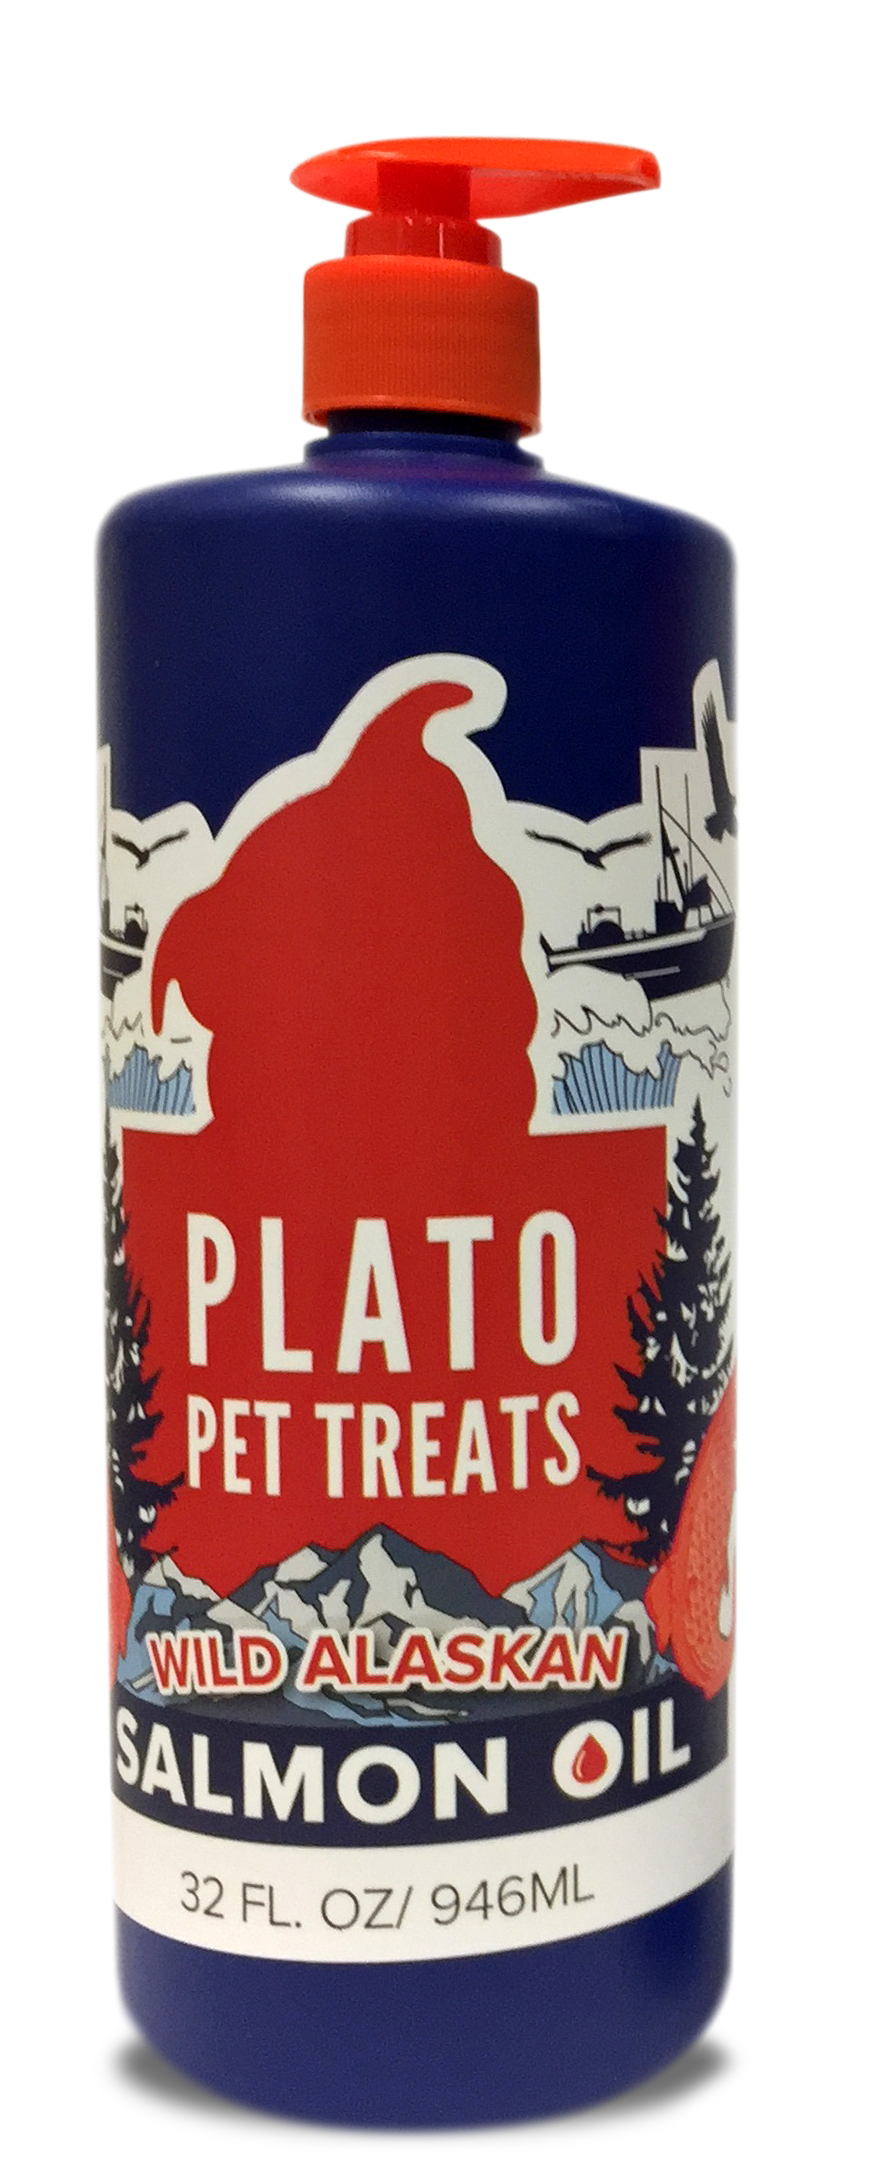 Plato Wild Alaskan Salmon Oil 8oz Bottle